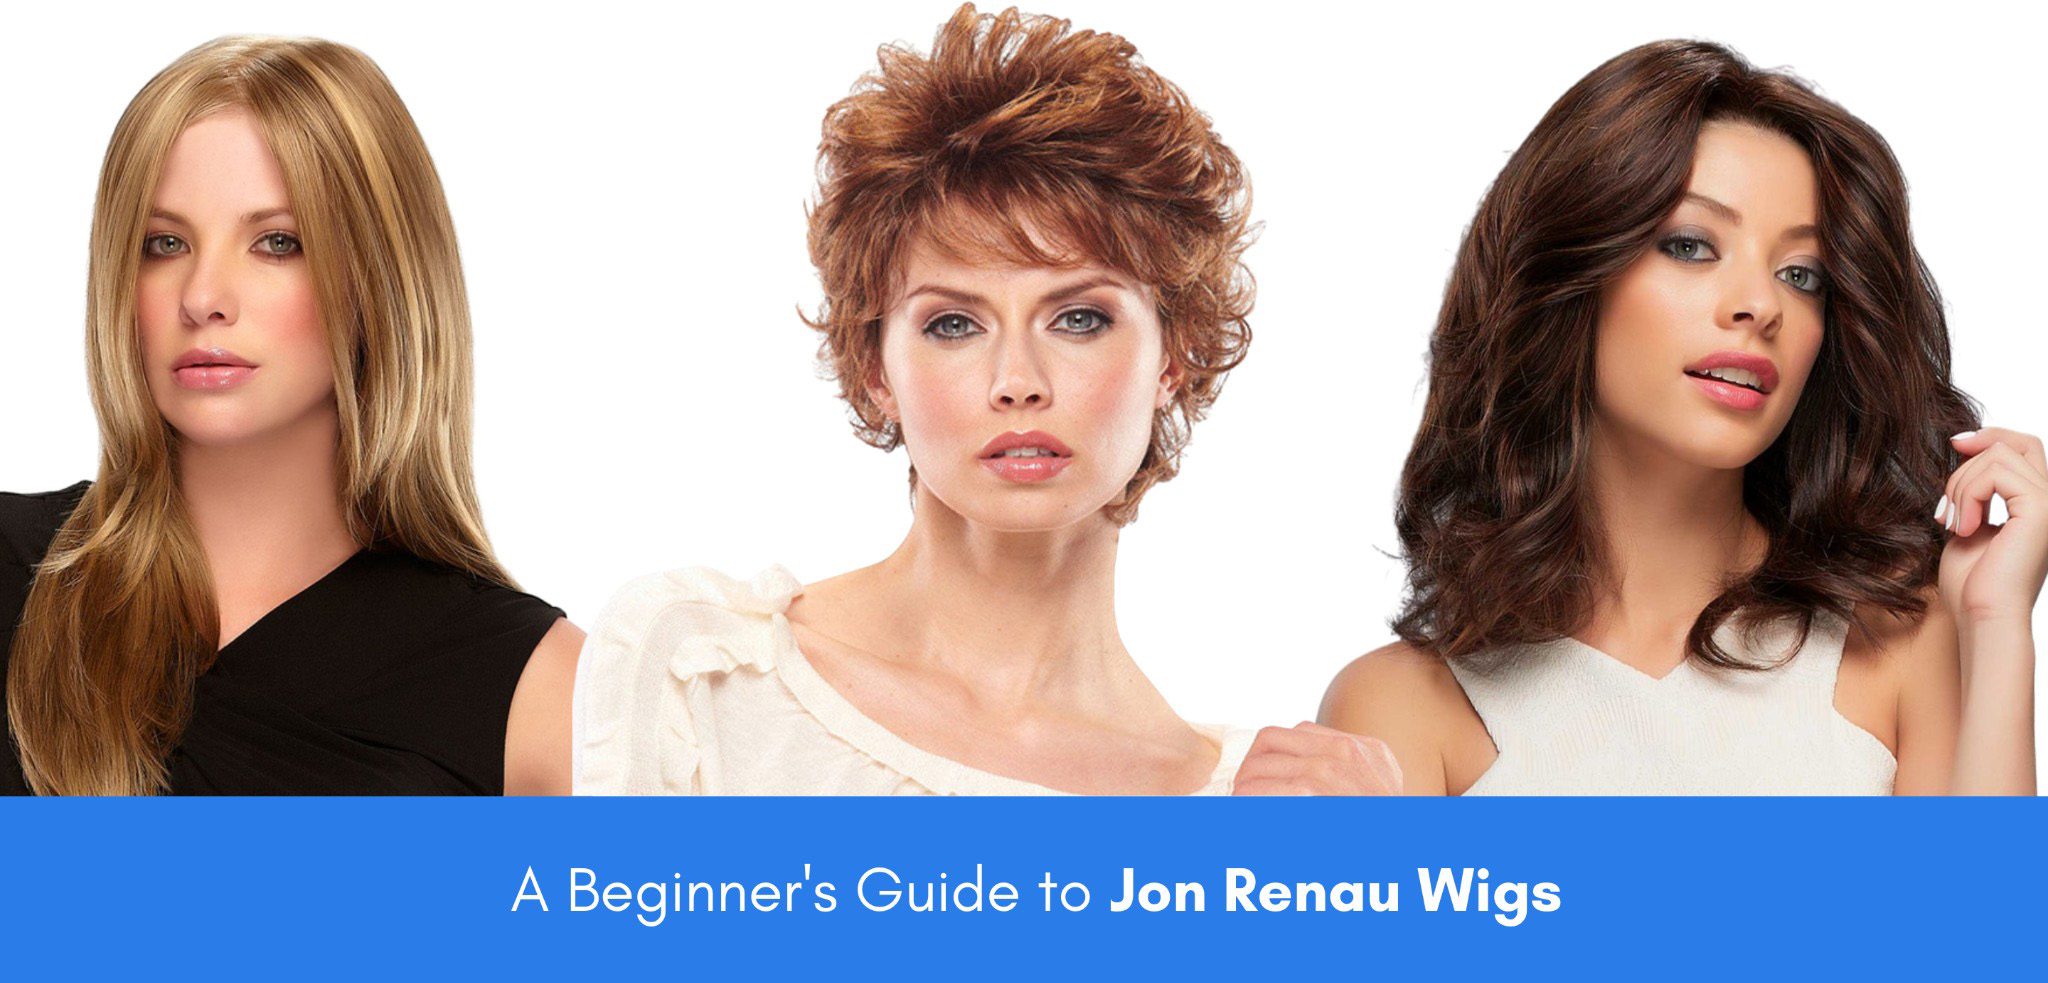 A Beginner’s Guide to Jon Renau Wigs